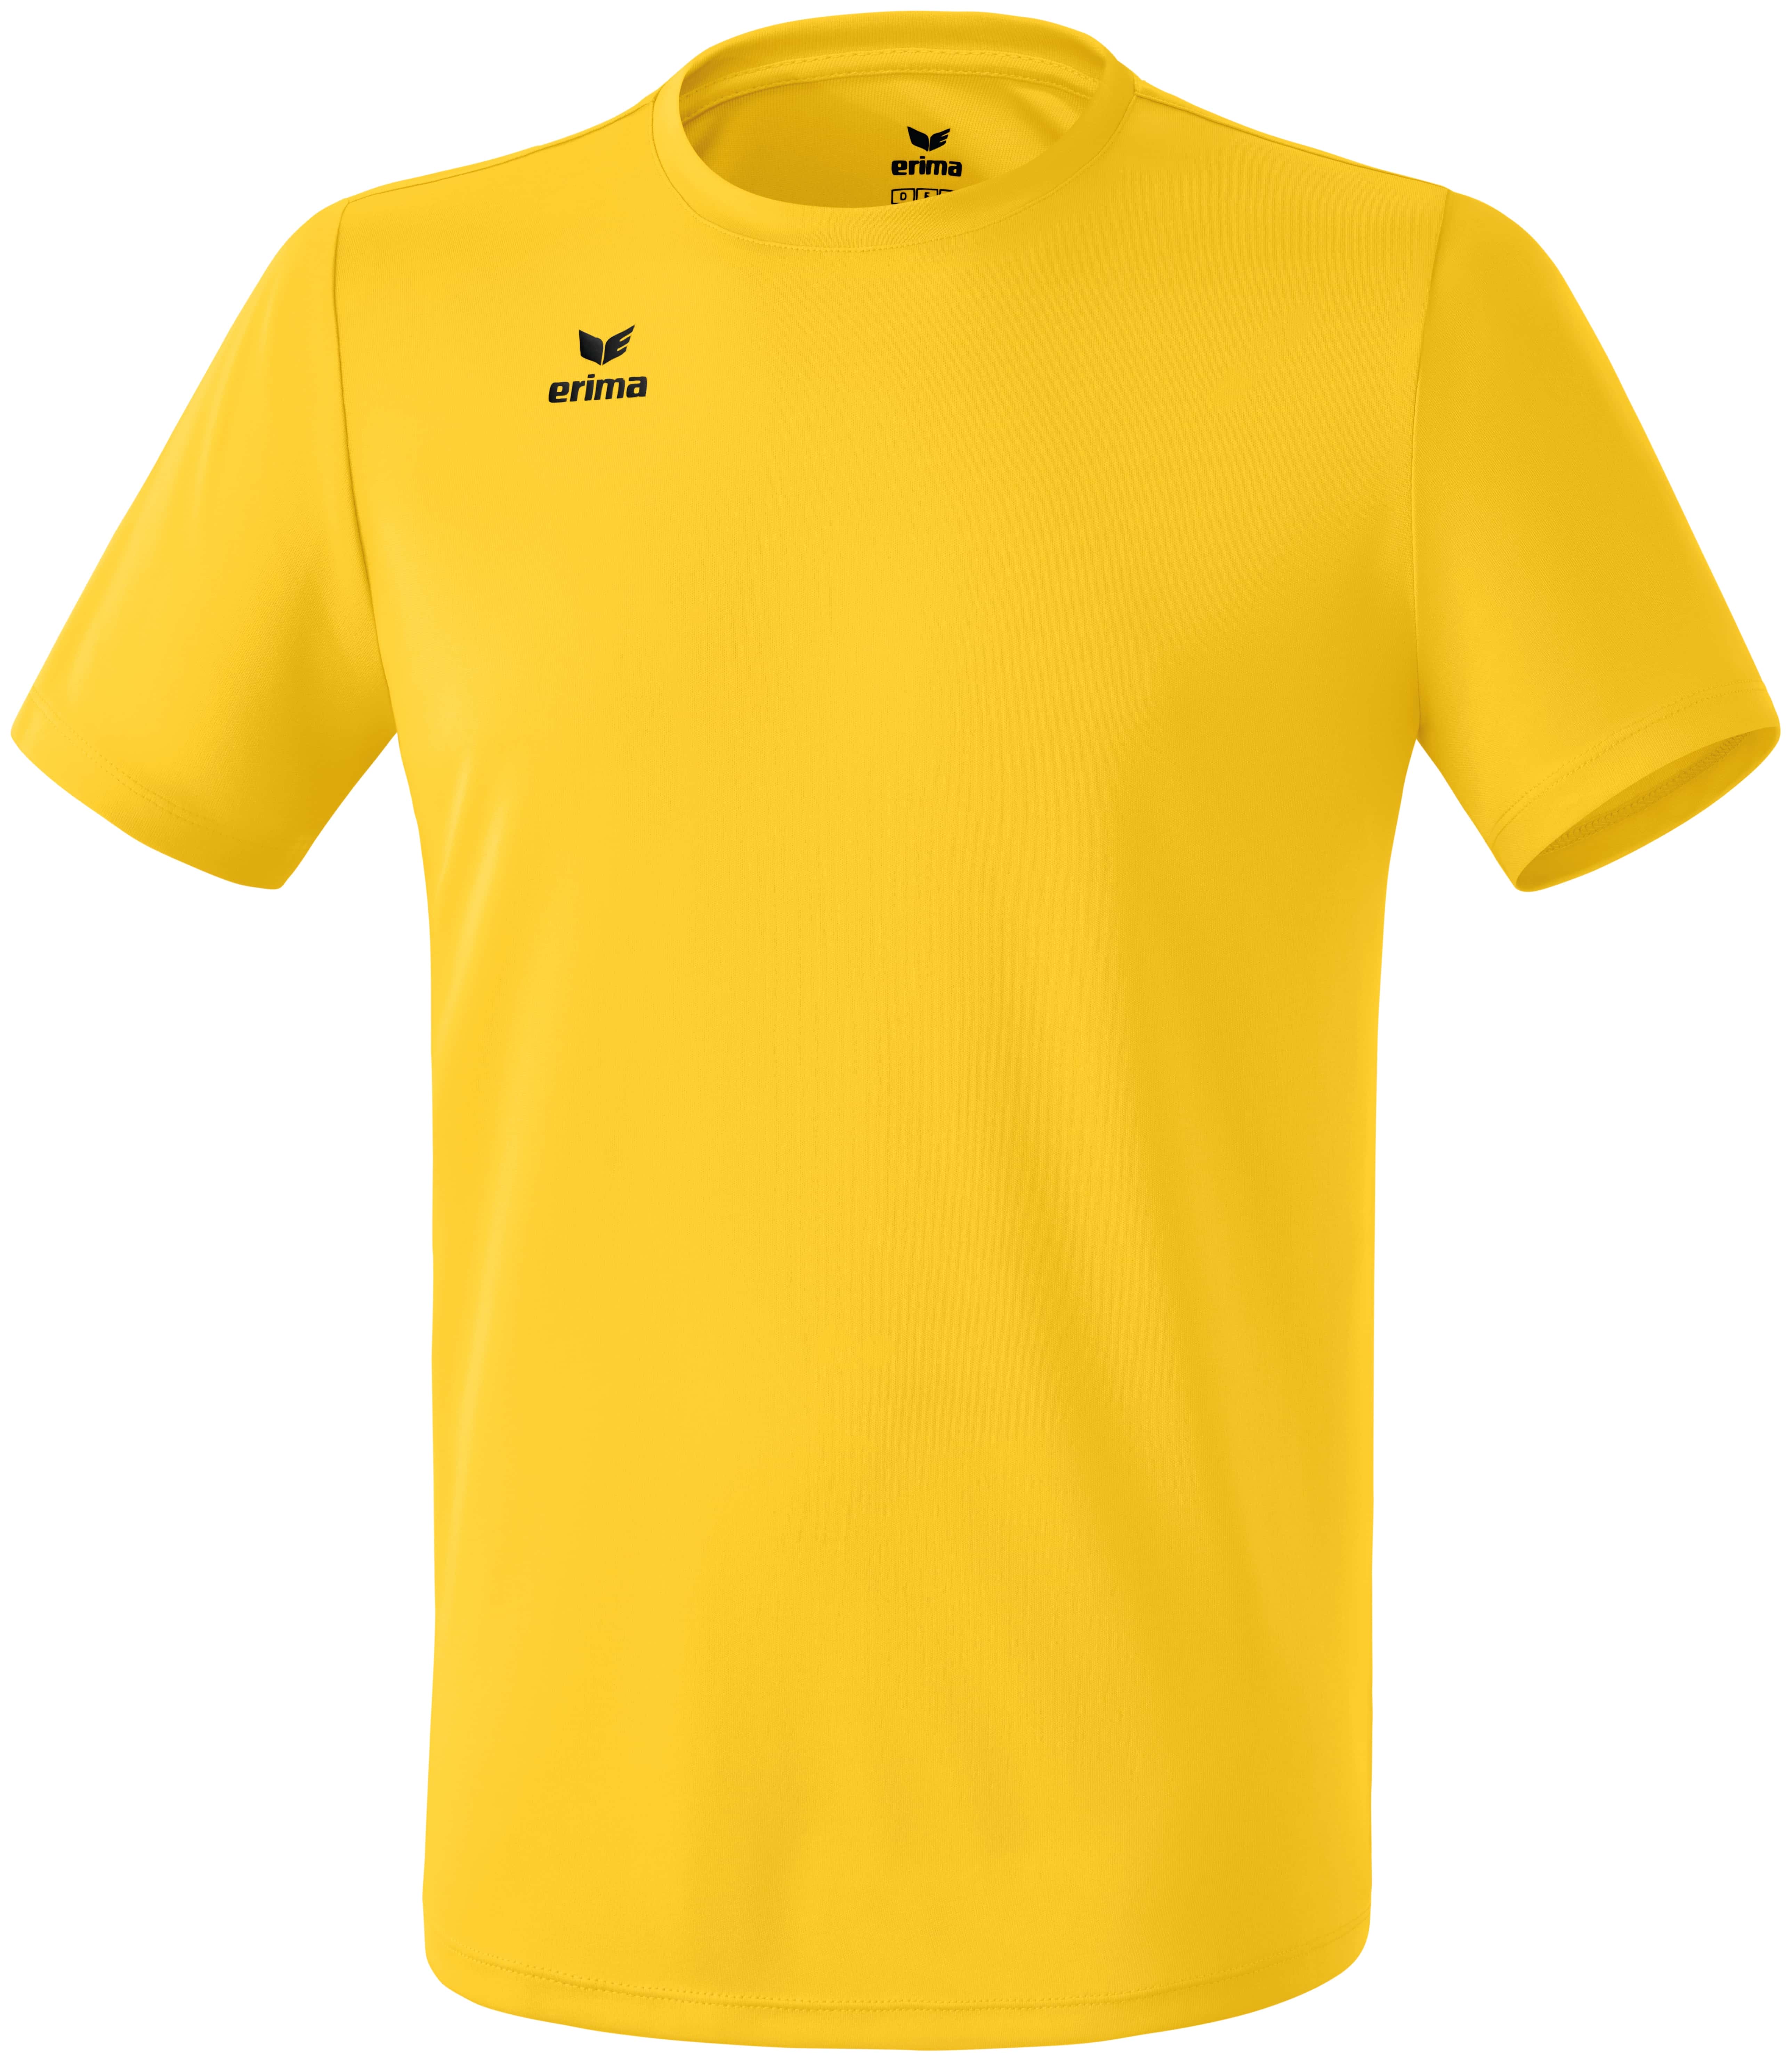 Erima Kinder Funktions Teamsport T-Shirt gelb